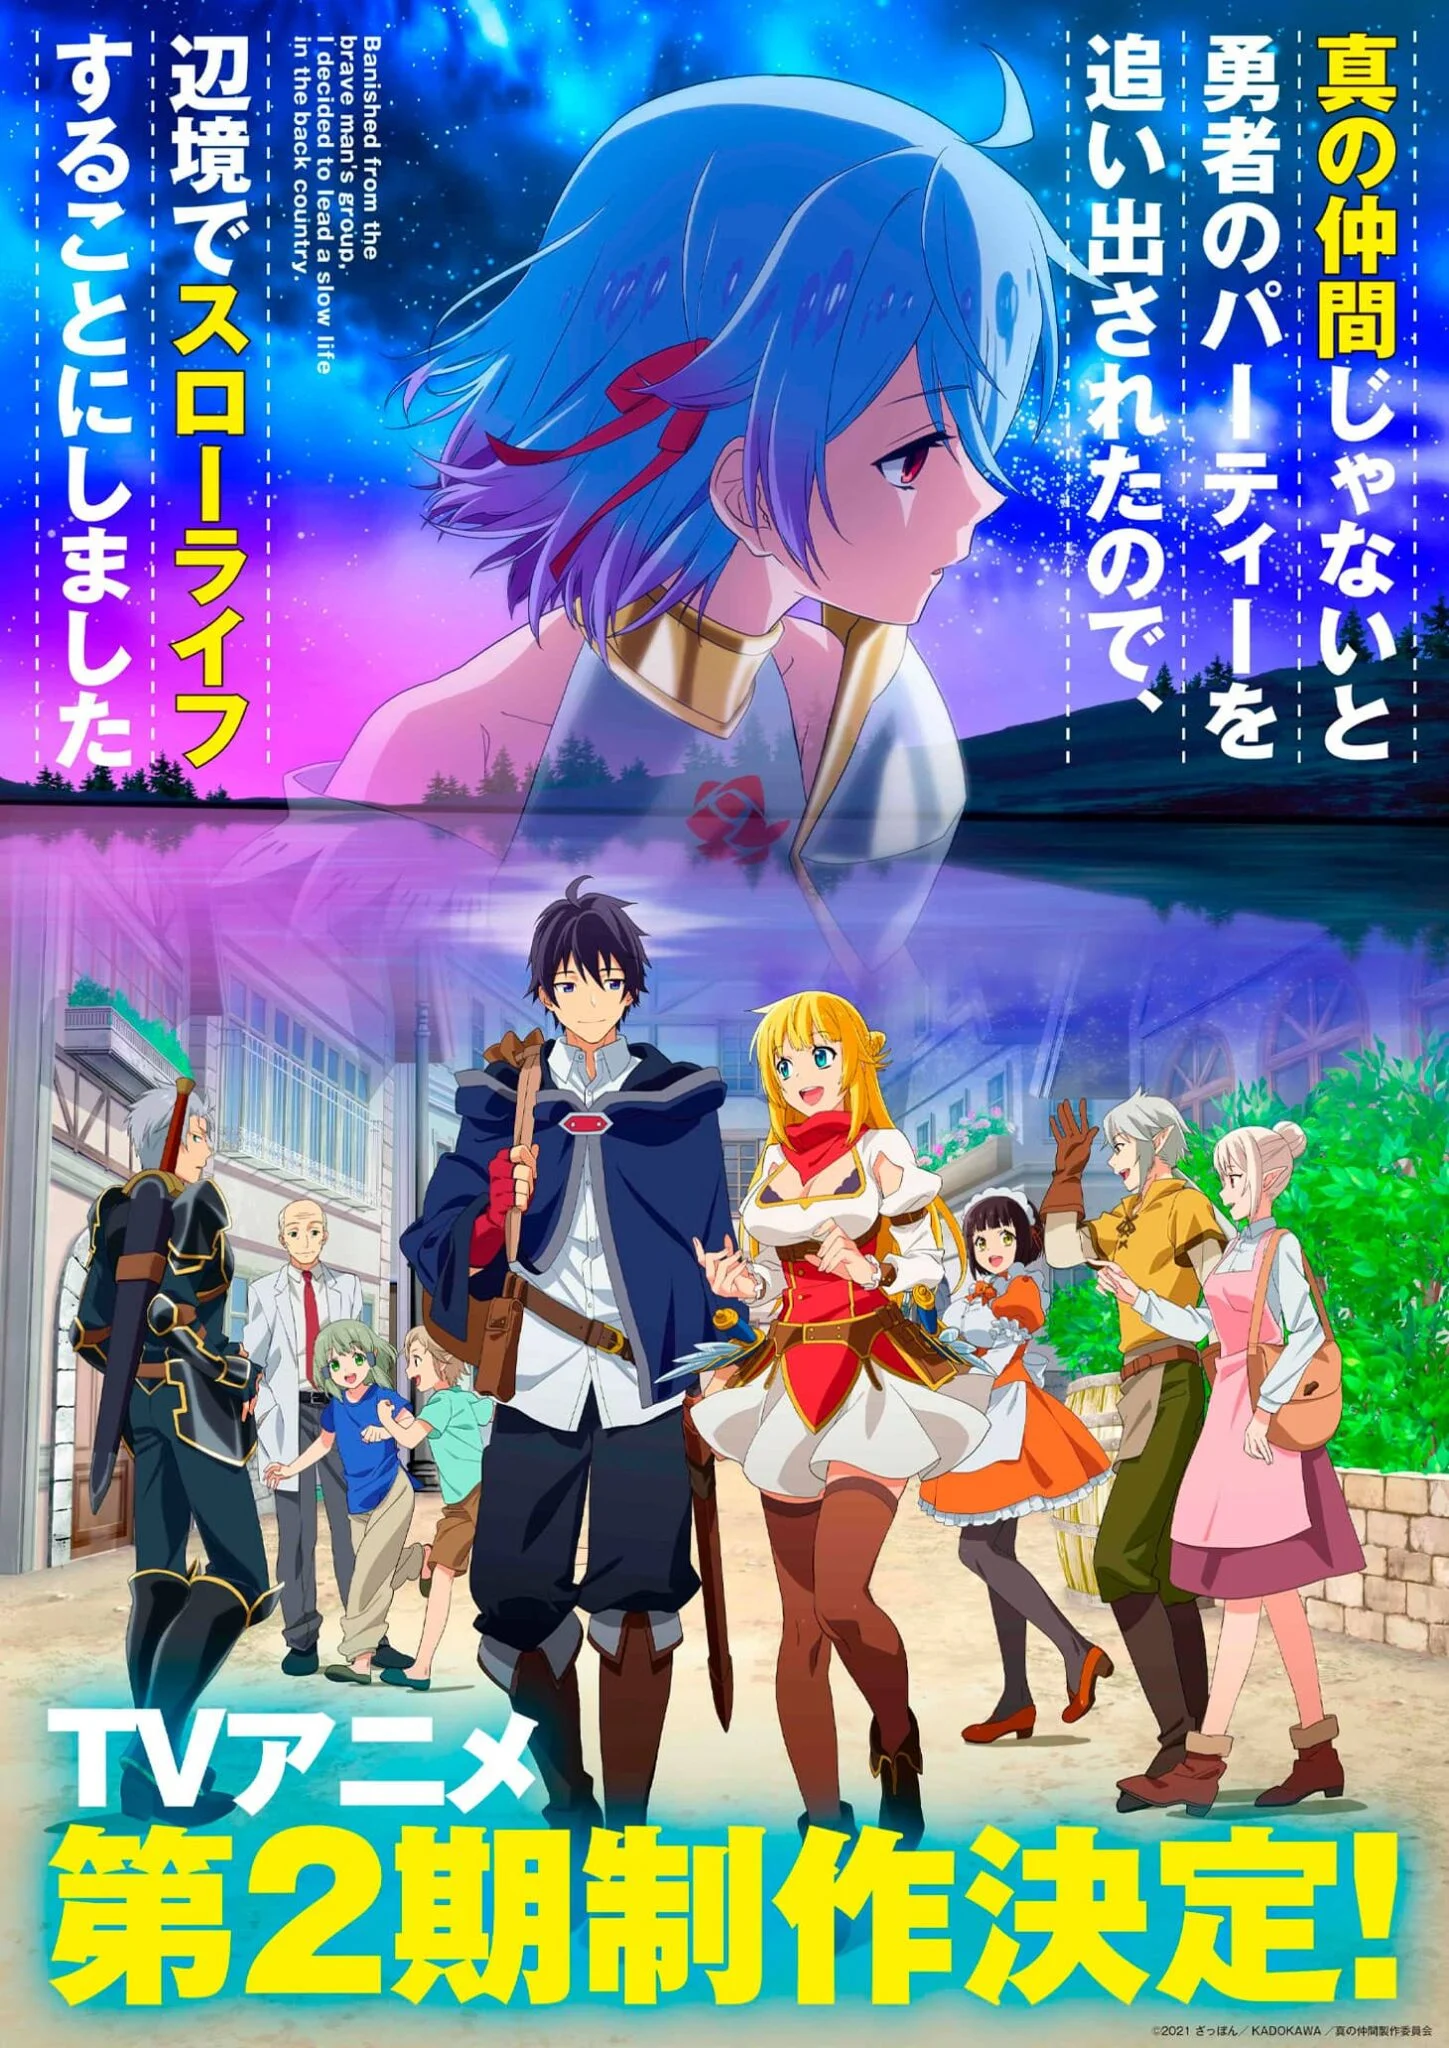 Anime's World - Shinchou yuusha tendrá segunda temporada, fecha aún sin  confirmar *Darklout*